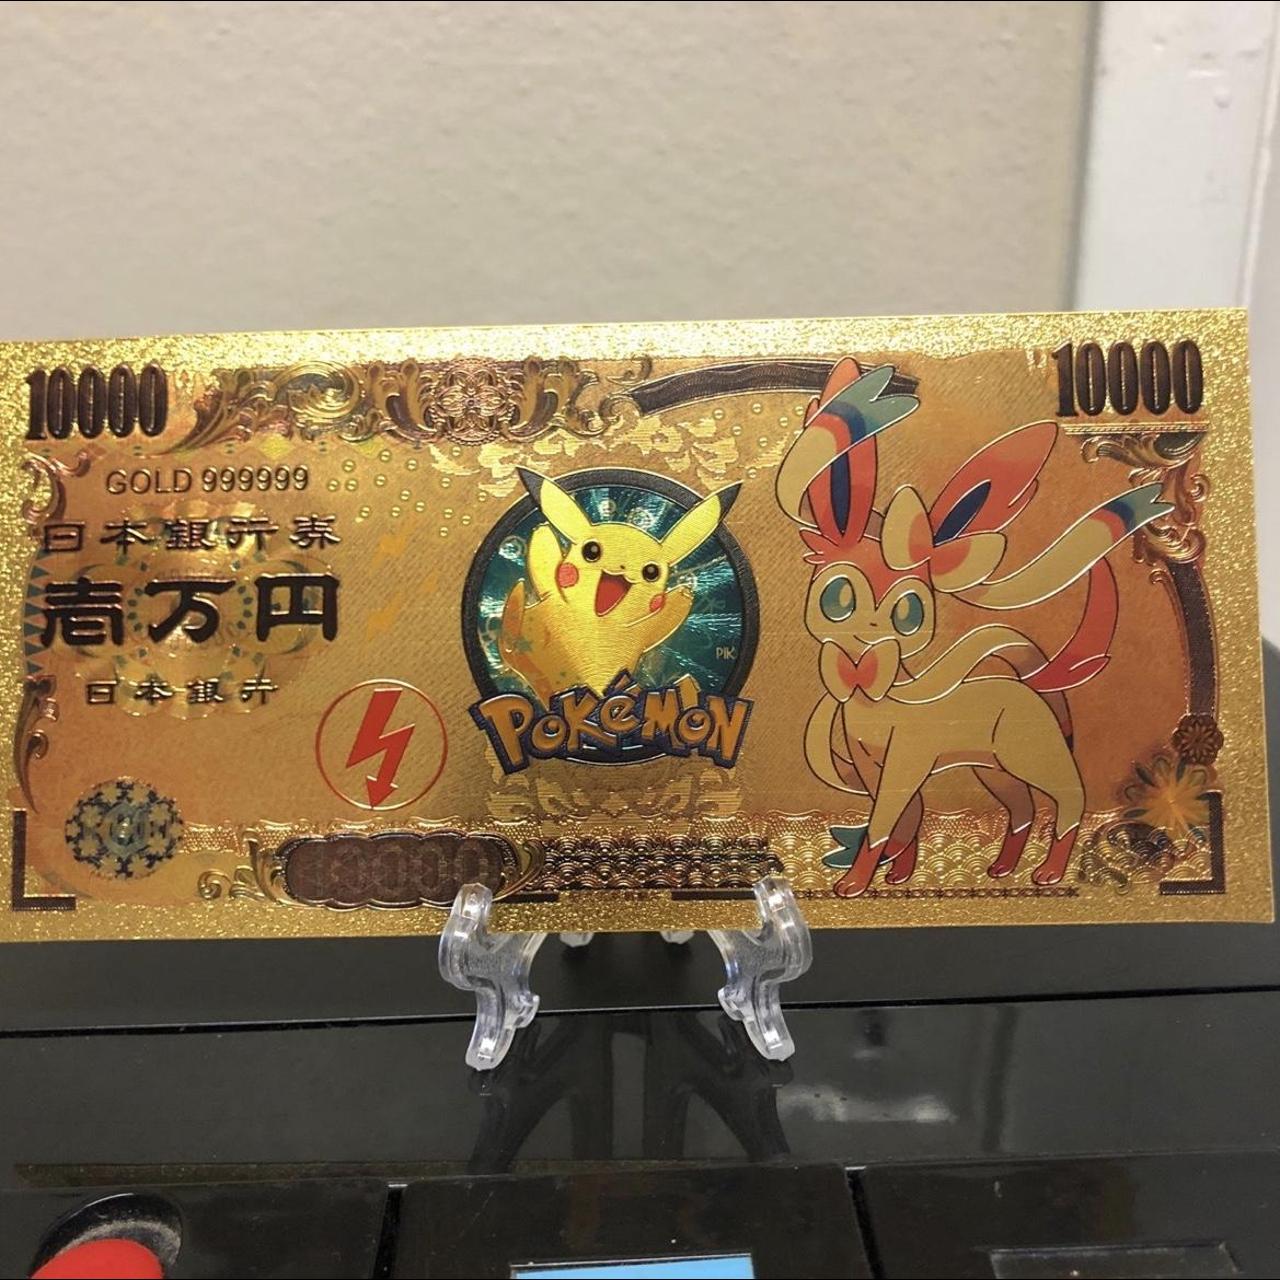 Eevee (Pokémon) 24k Gold Plated Banknote (Not real - Depop